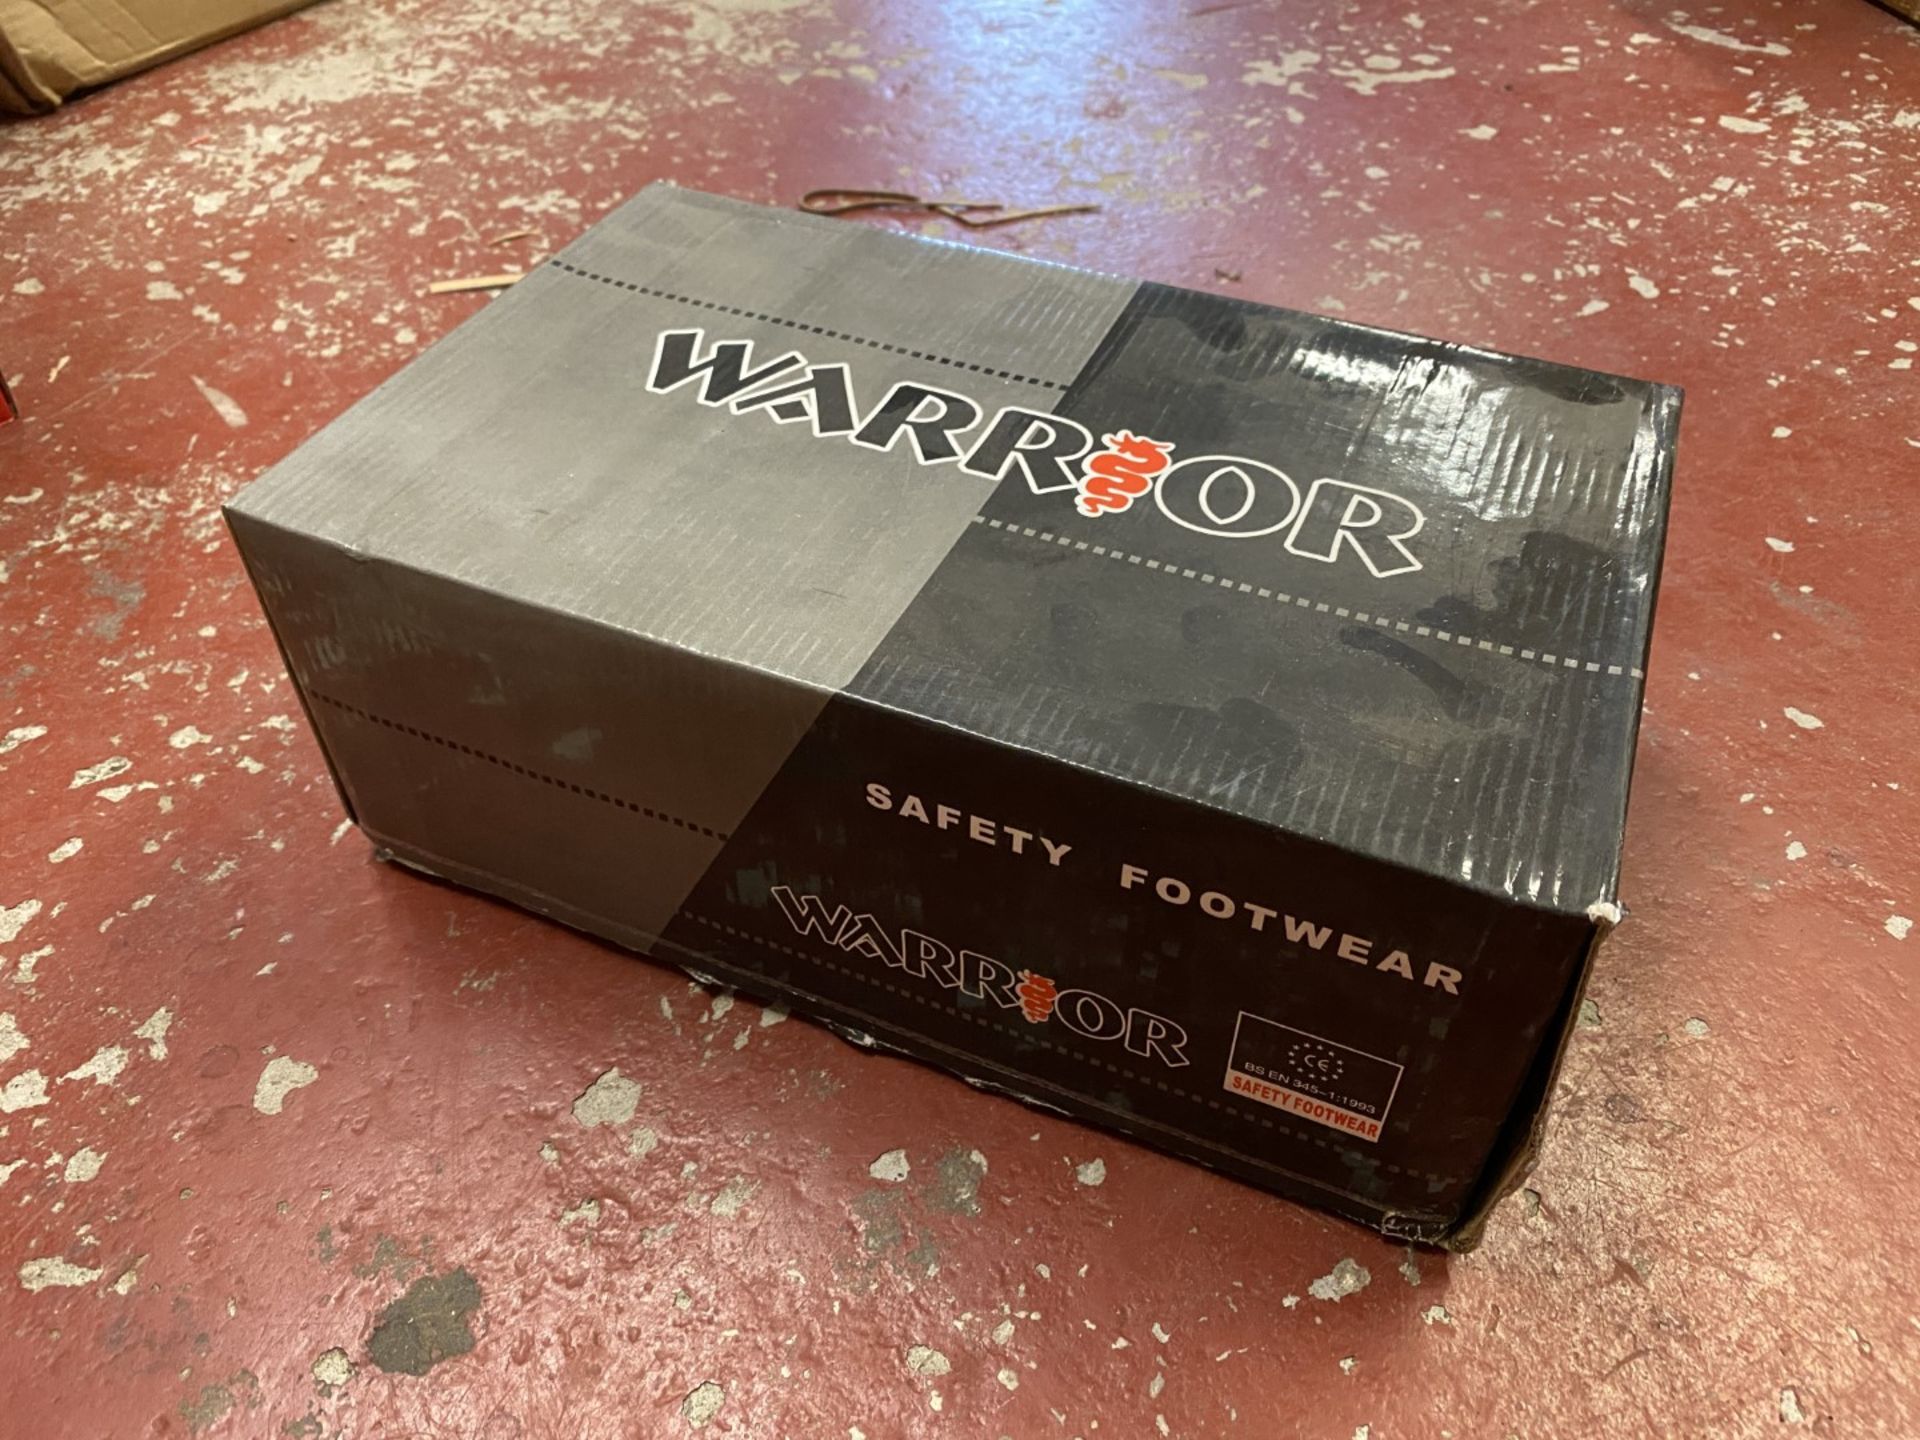 NEW Warrior safety shoes, UK size 9